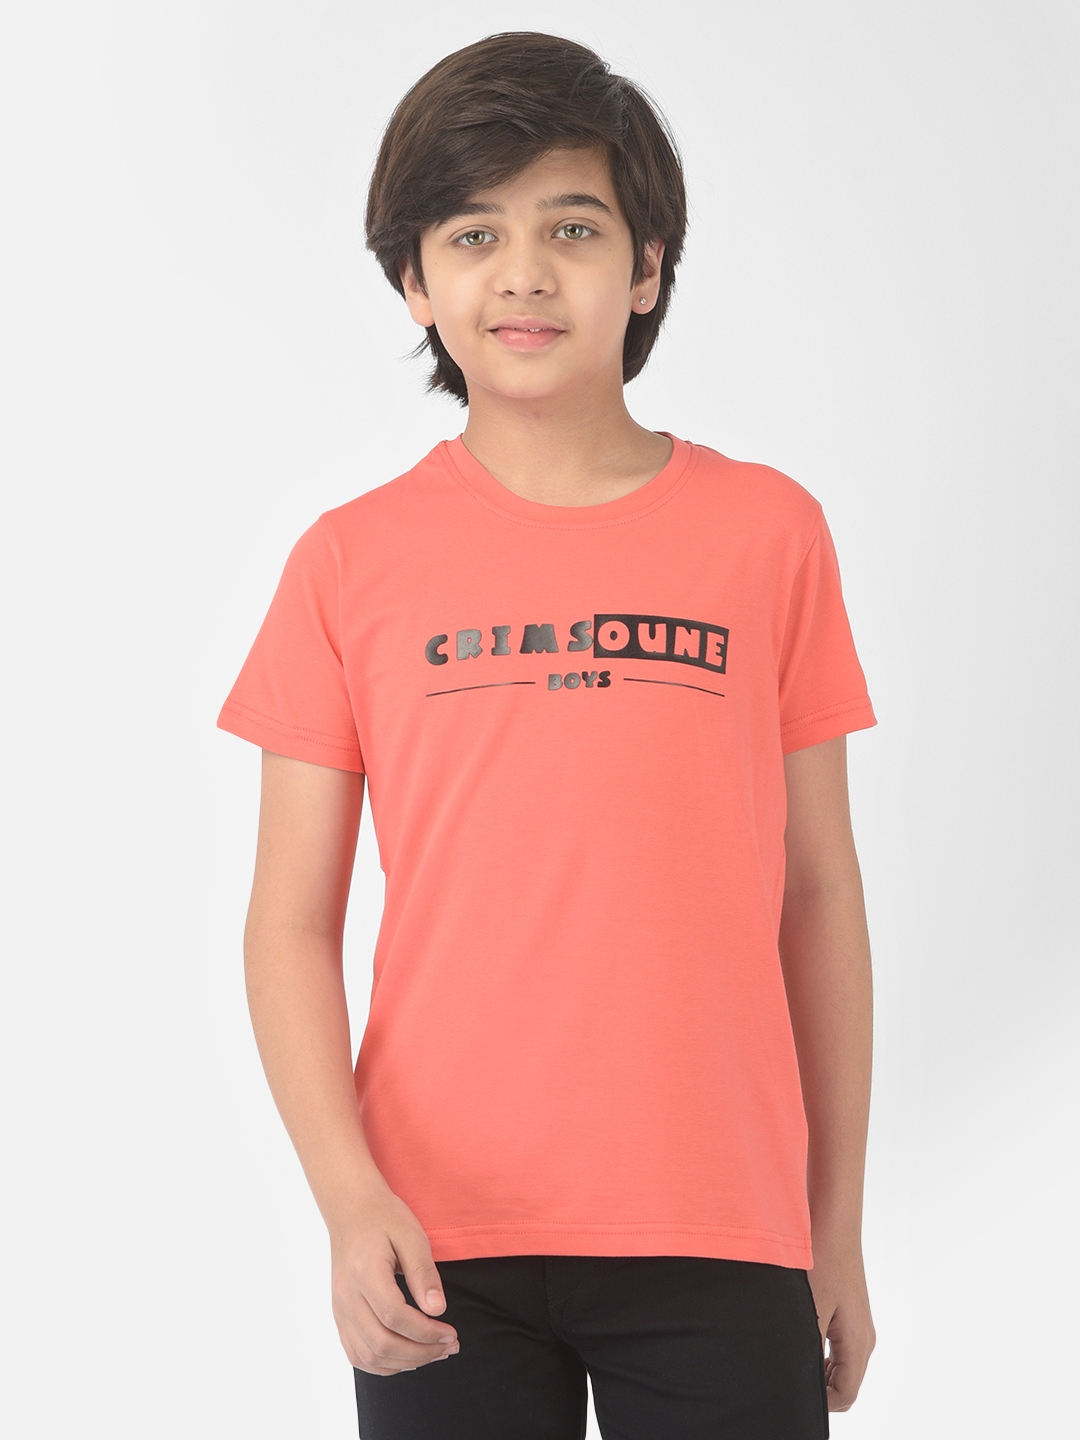 Crimsoune Club Boy Pink Printed Round Neck T-shirt